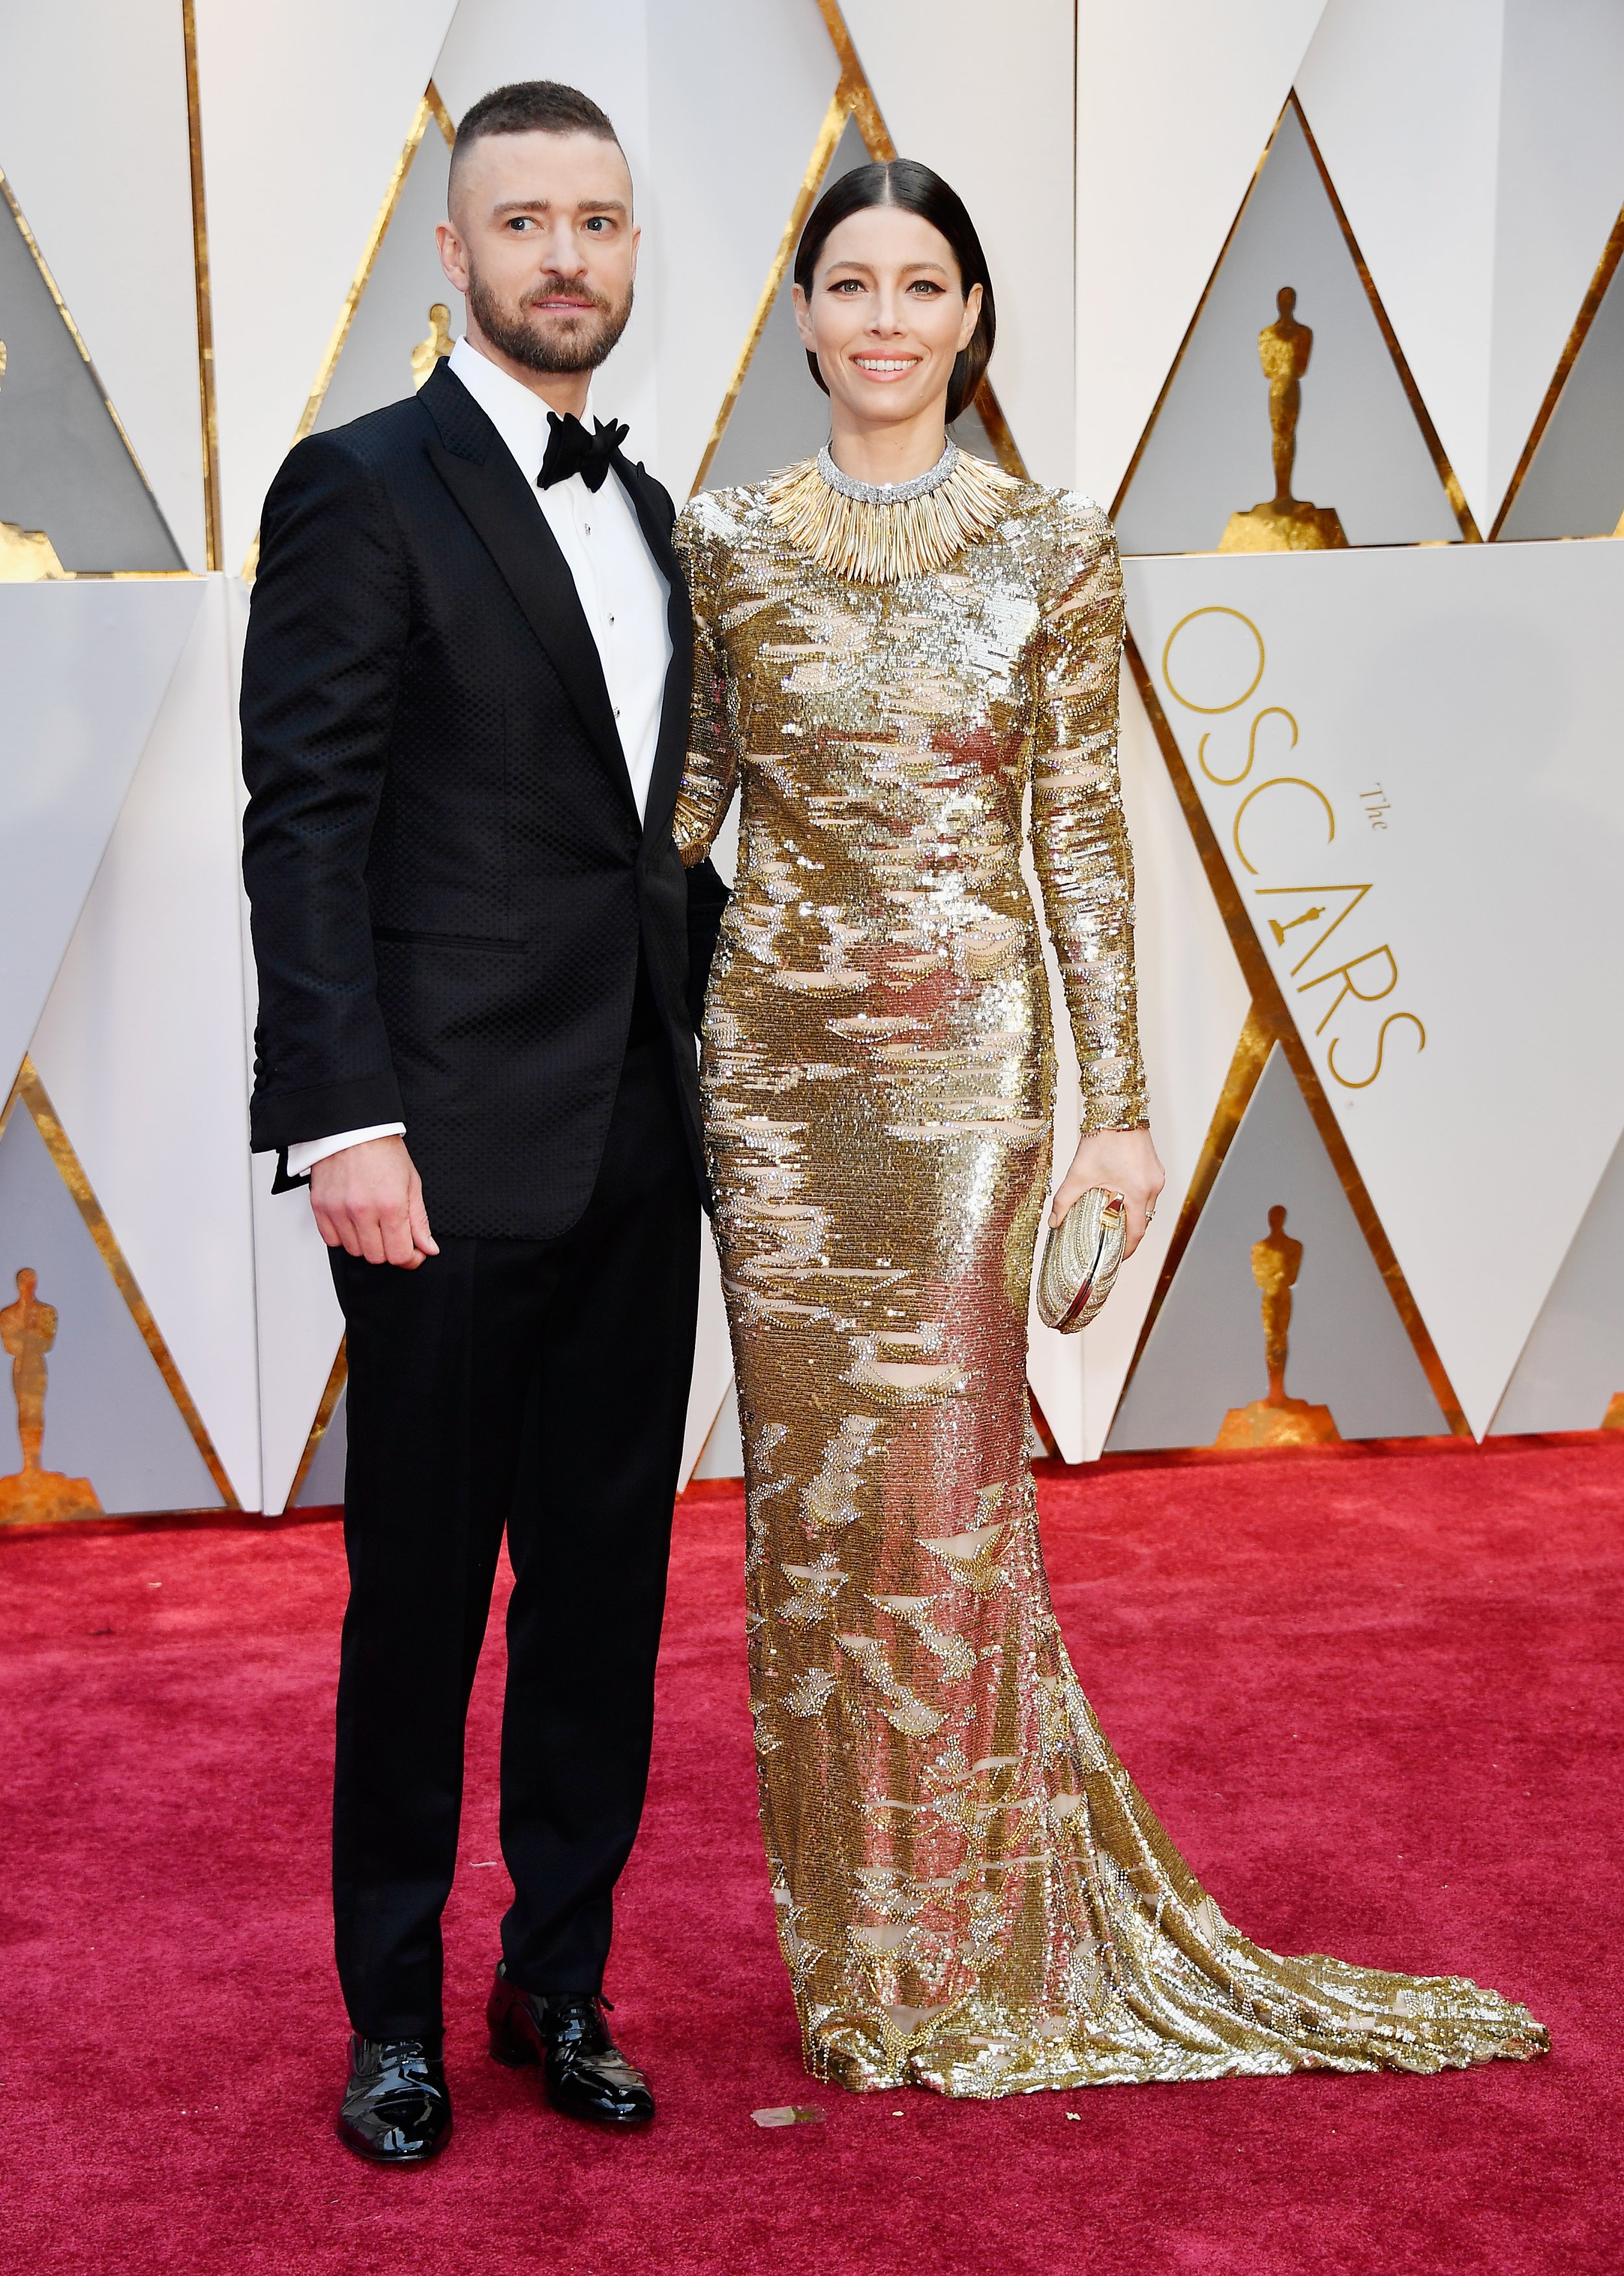 Oscars 2017 Red Carpet Photos Justin Timberlake, Jessica Biel